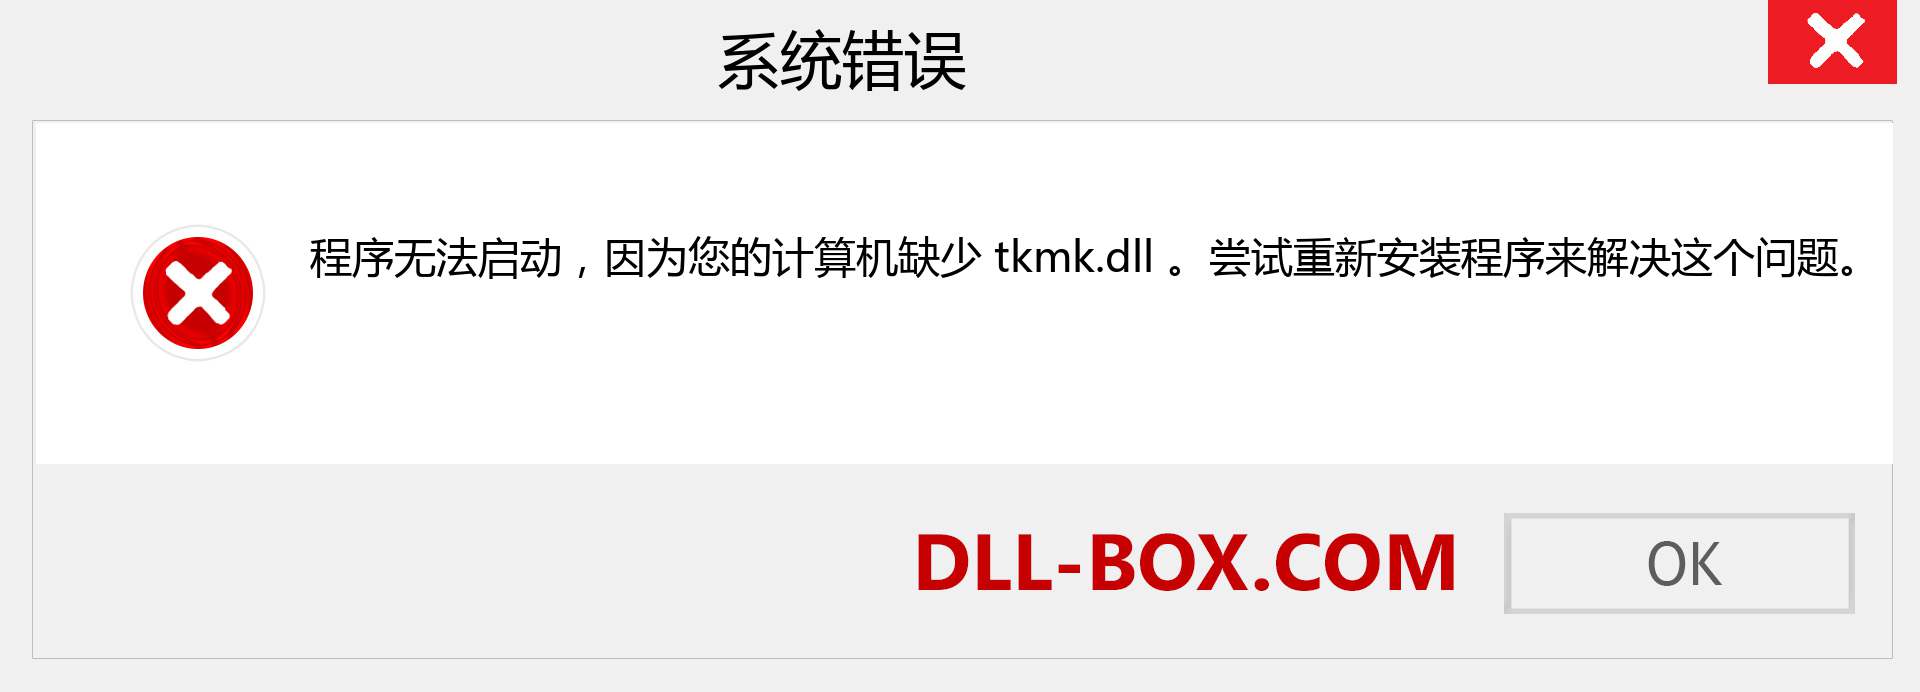 tkmk.dll 文件丢失？。 适用于 Windows 7、8、10 的下载 - 修复 Windows、照片、图像上的 tkmk dll 丢失错误